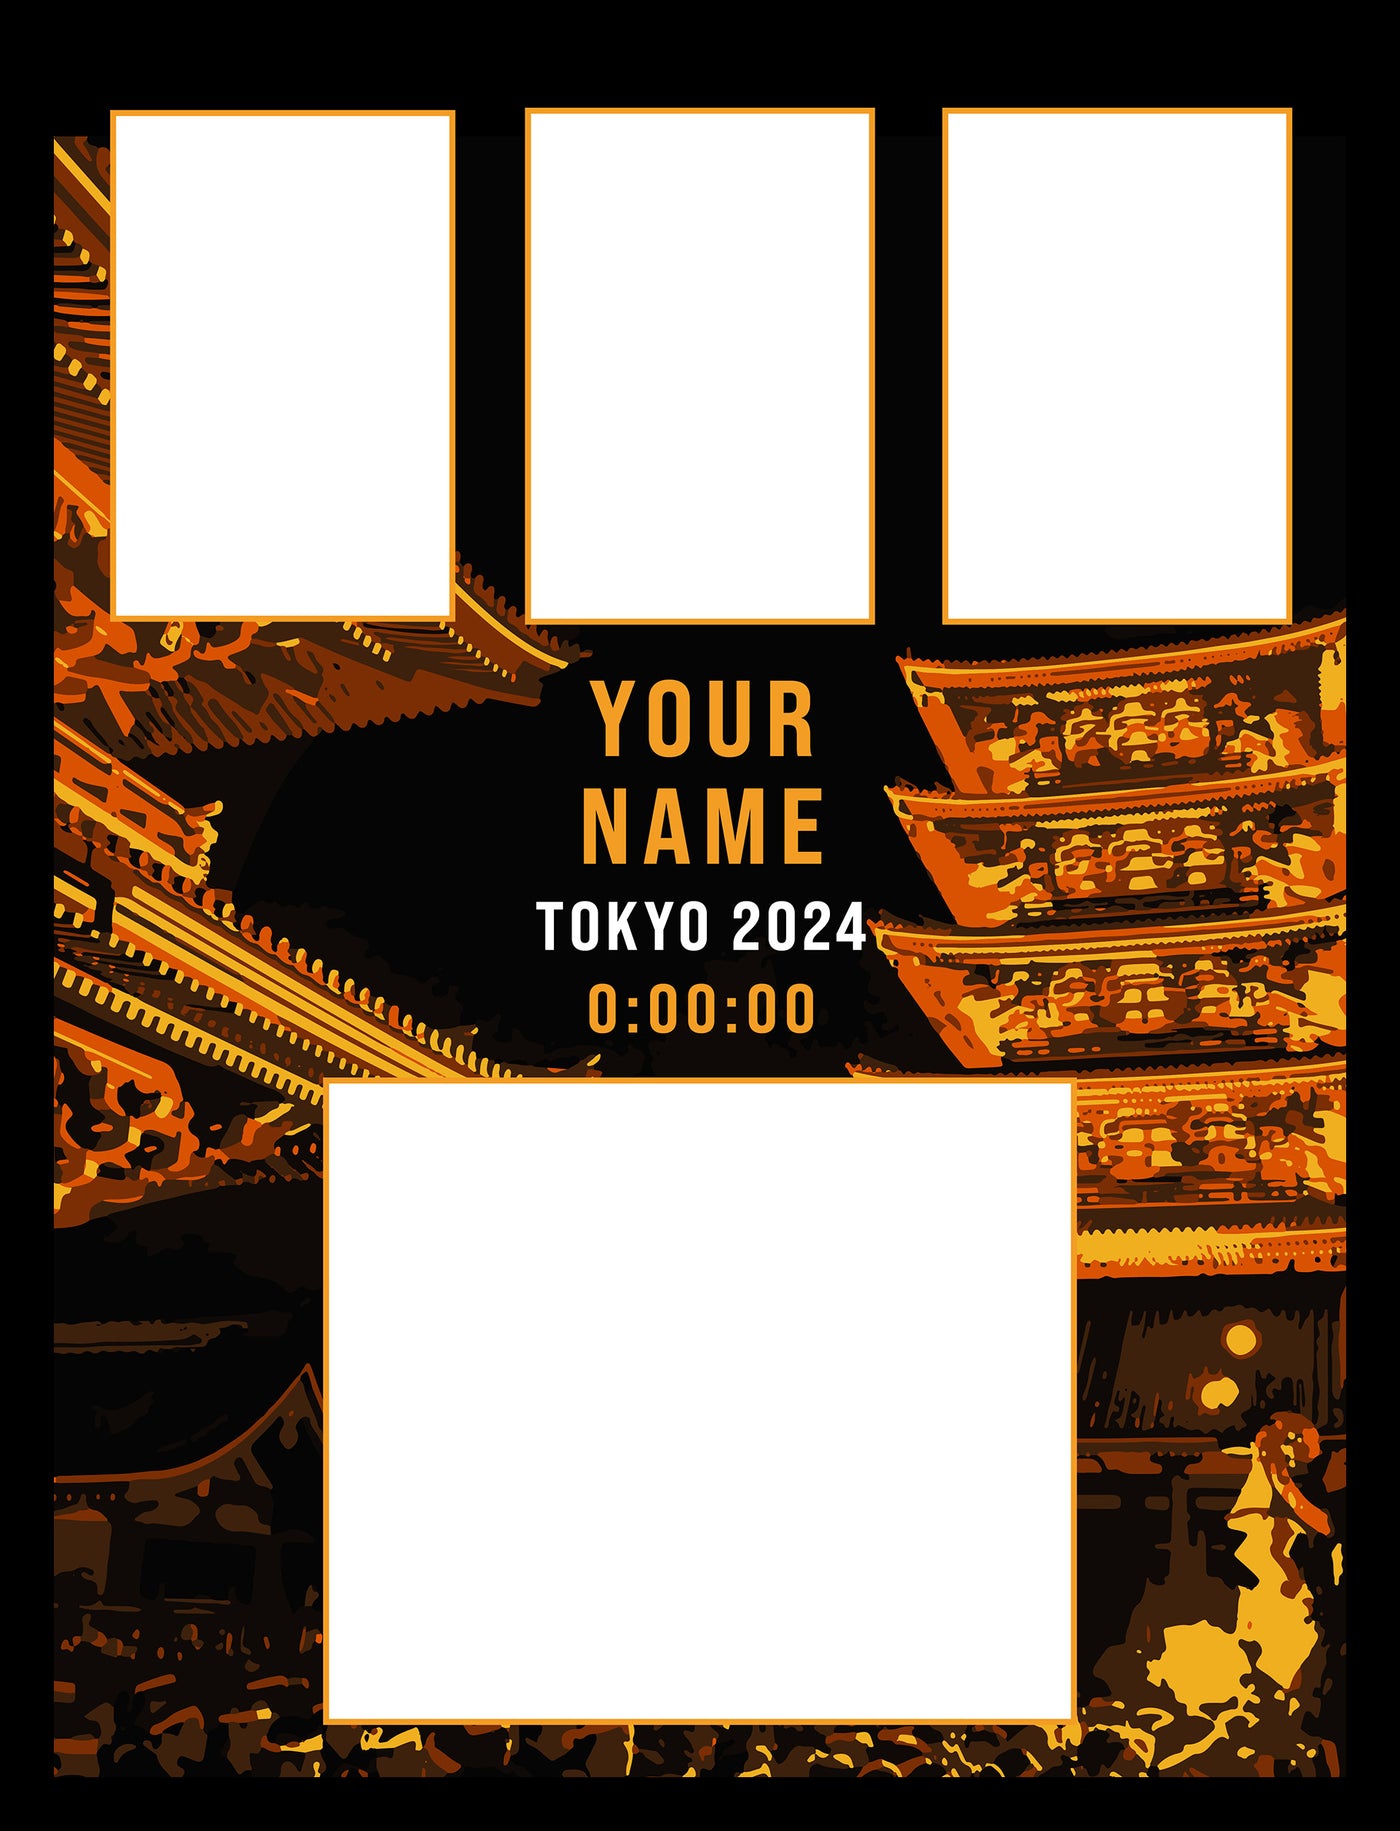 Tokyo 2024